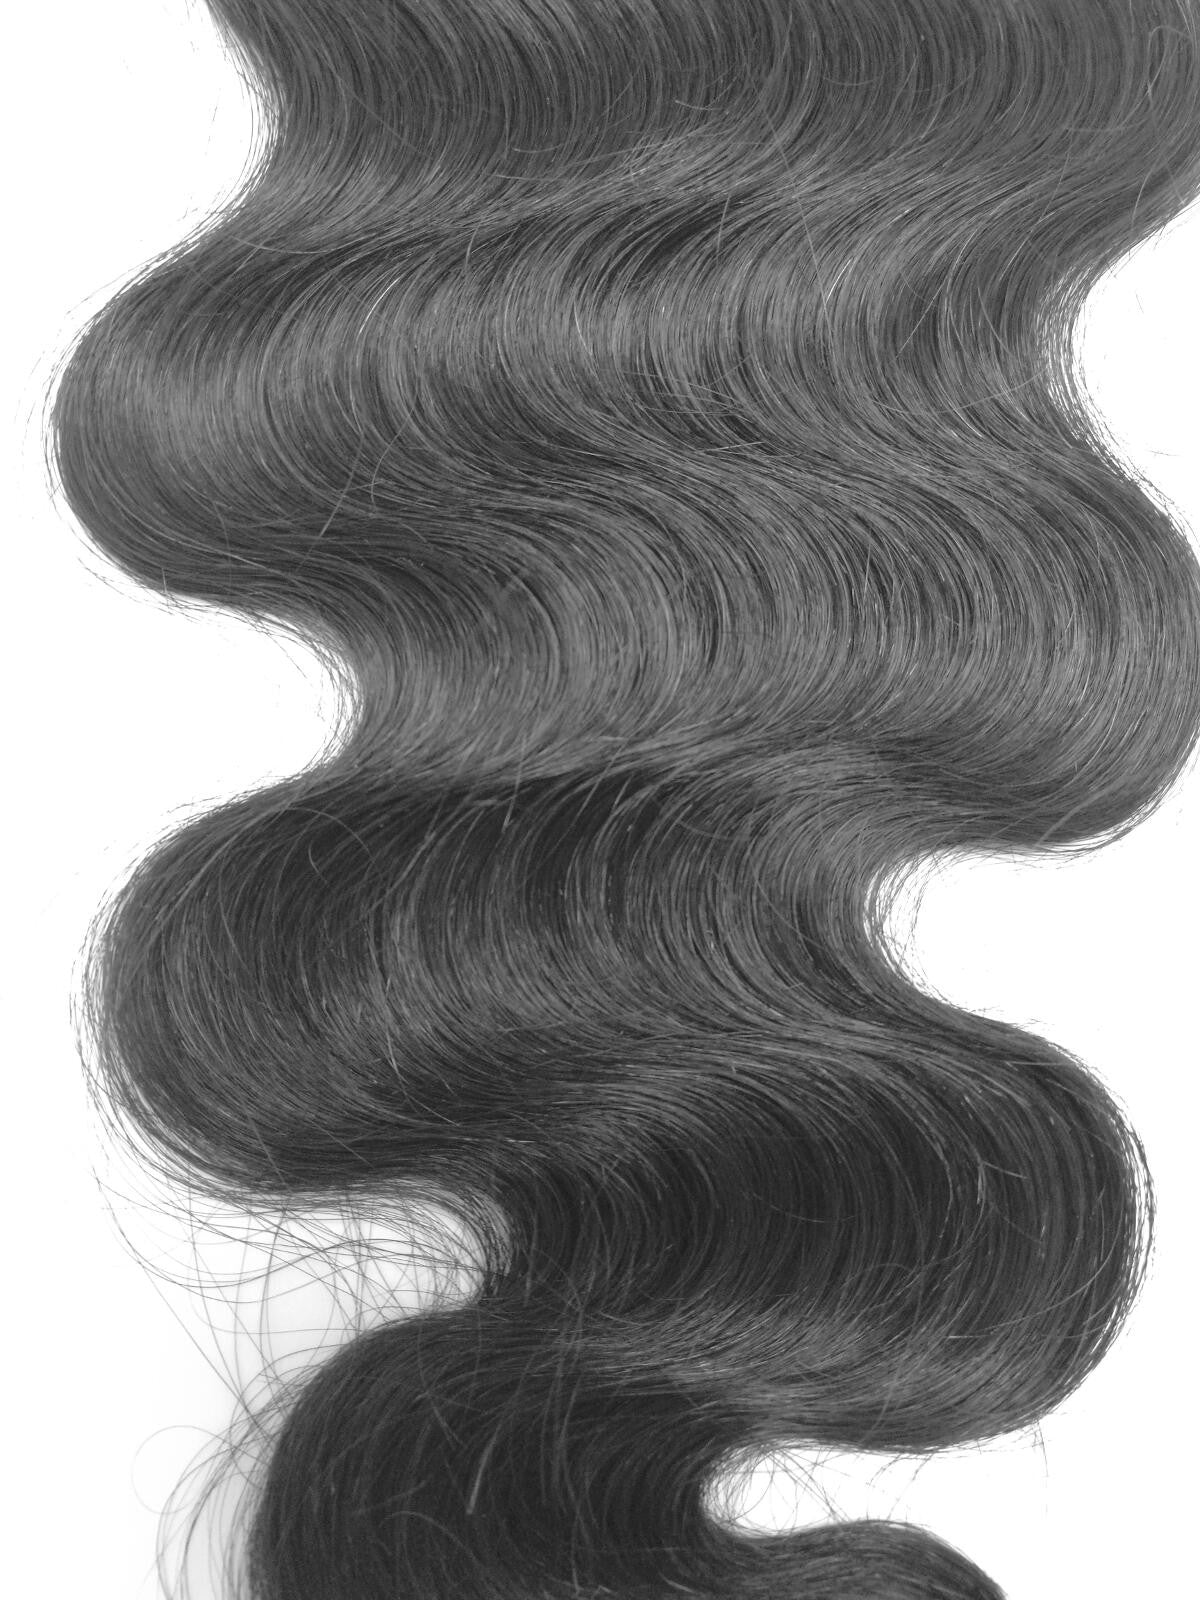 4"x4" Lace Closure-BODY WAVE - Euryale Virgin Hair